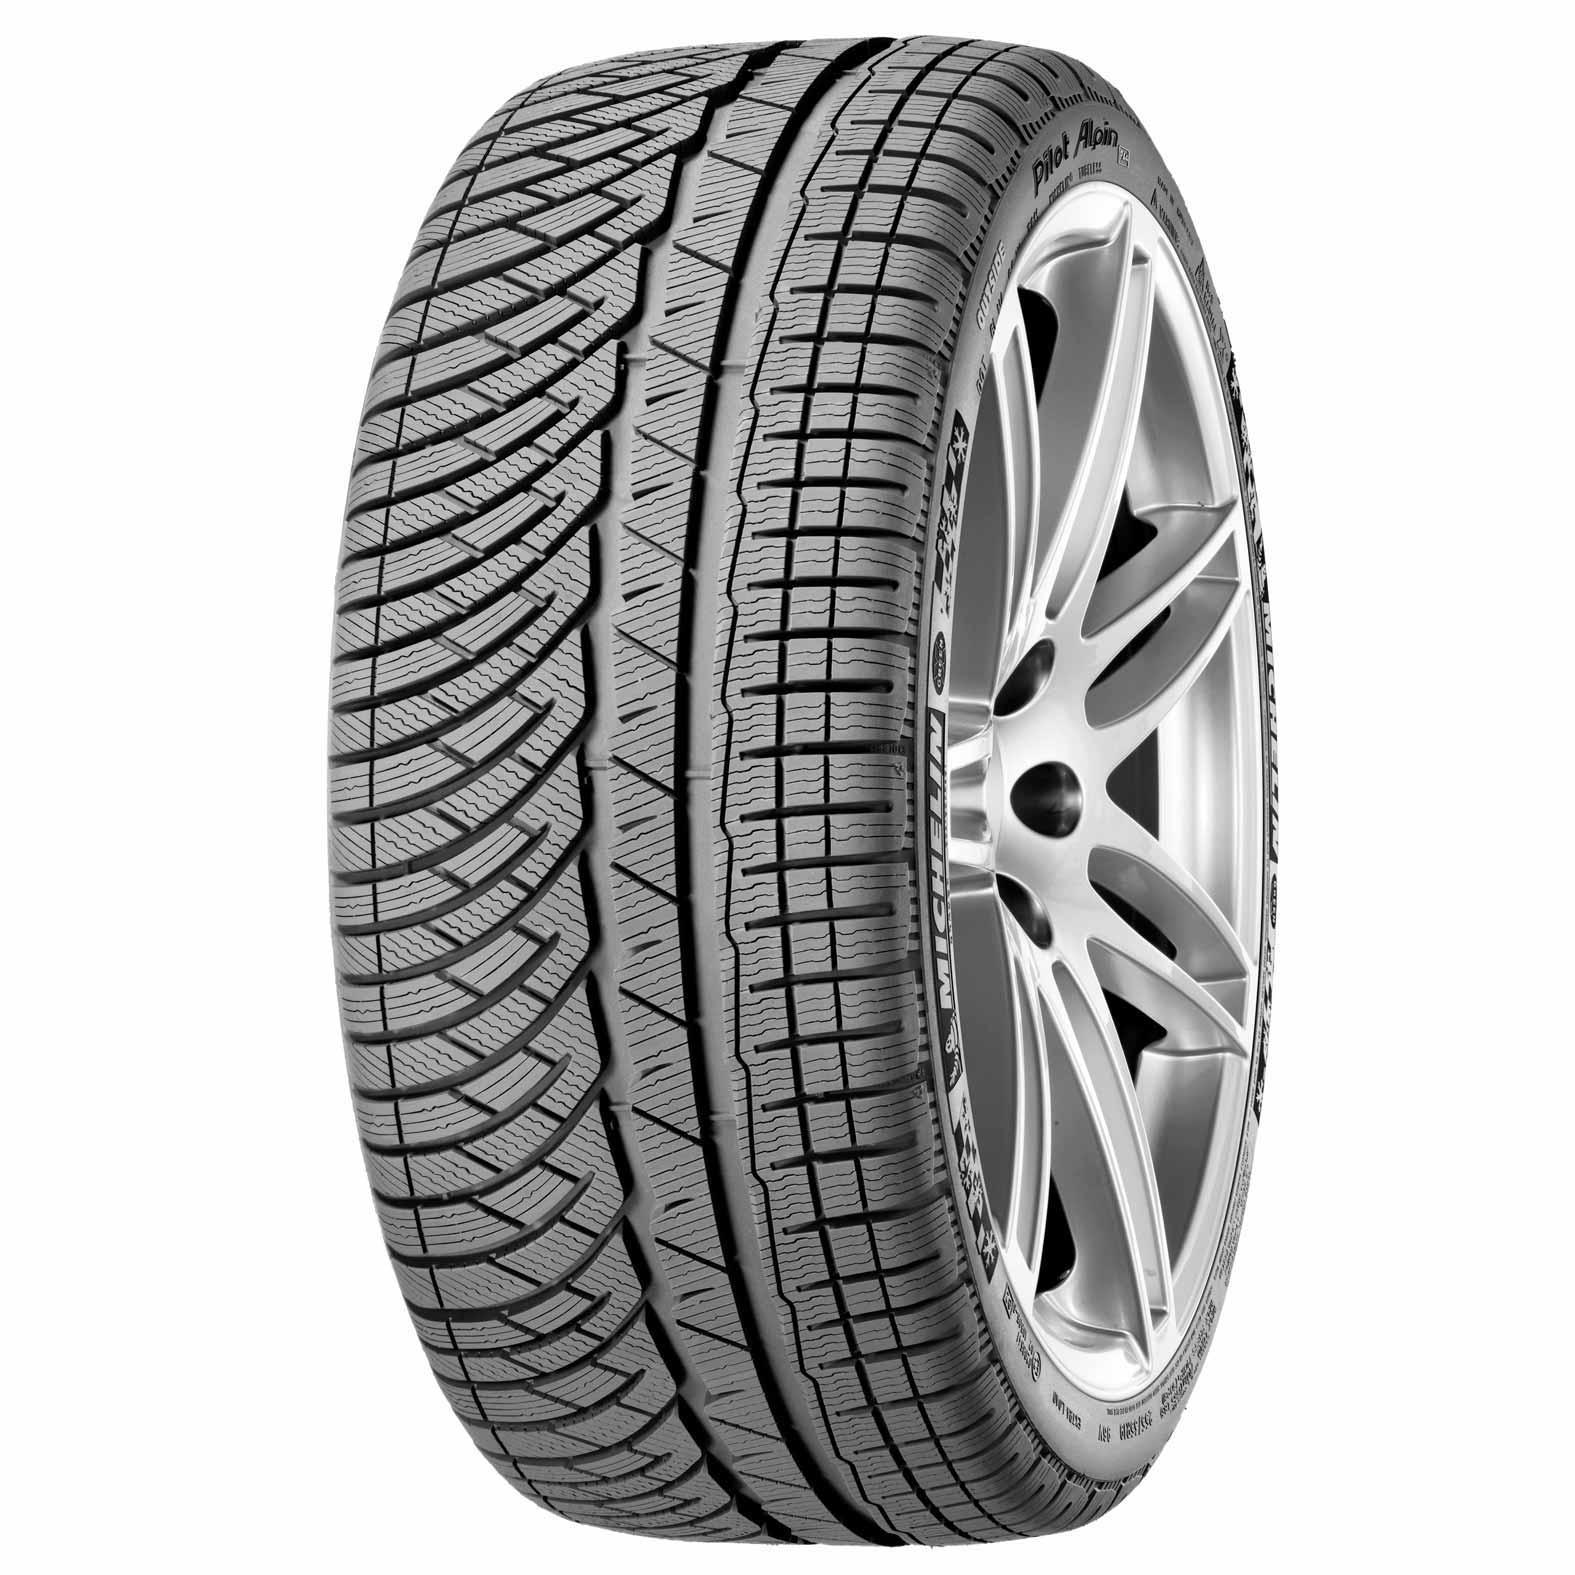 Michelin Pilot Alpin PA4 Tires for Winter | Kal Tire